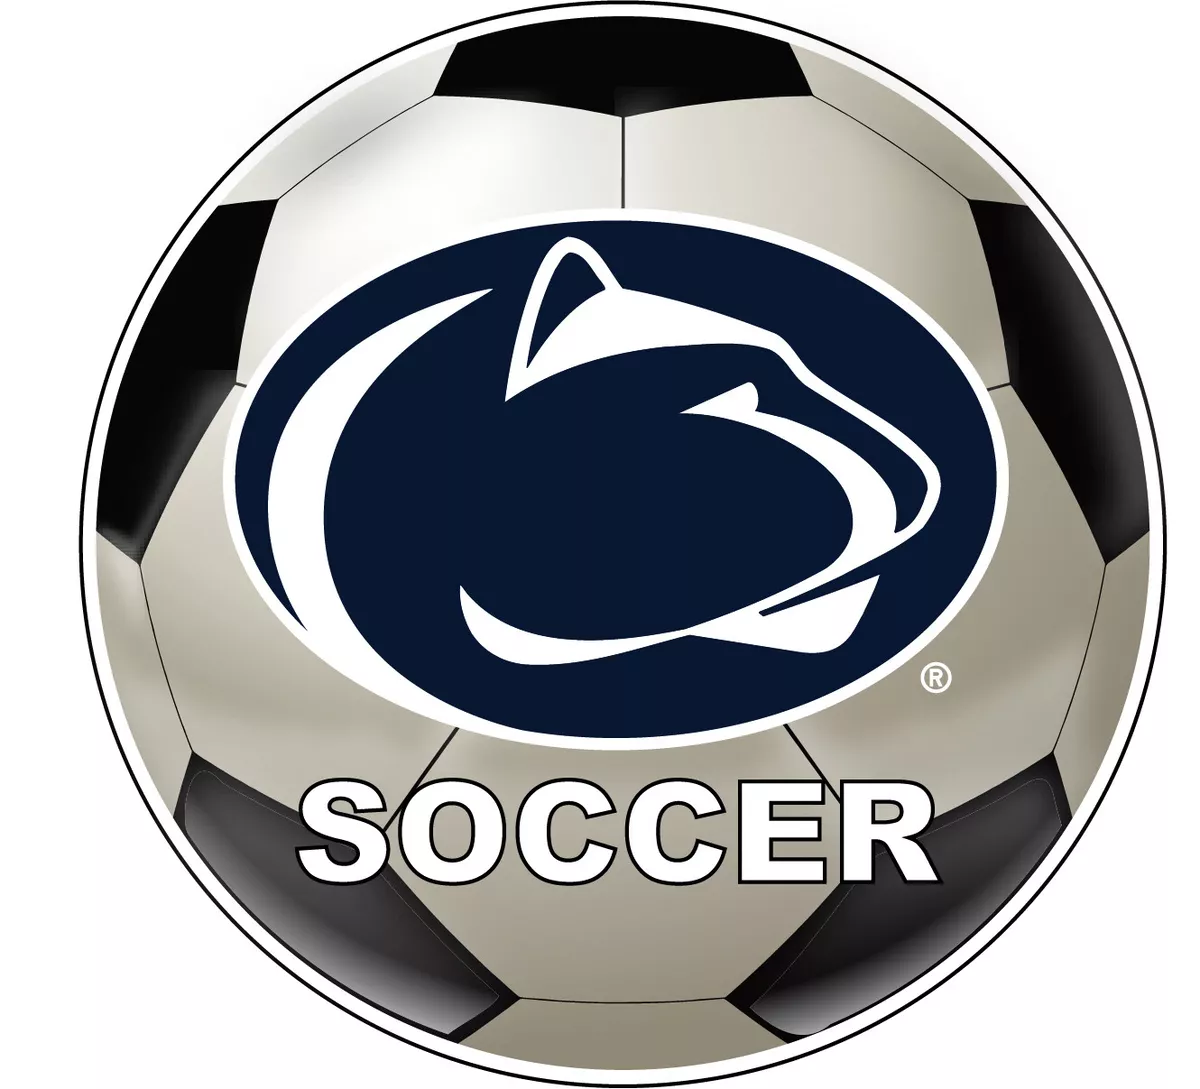 Penn State Lions Soccer Ball Decal Sticker 2-Pack | eBay